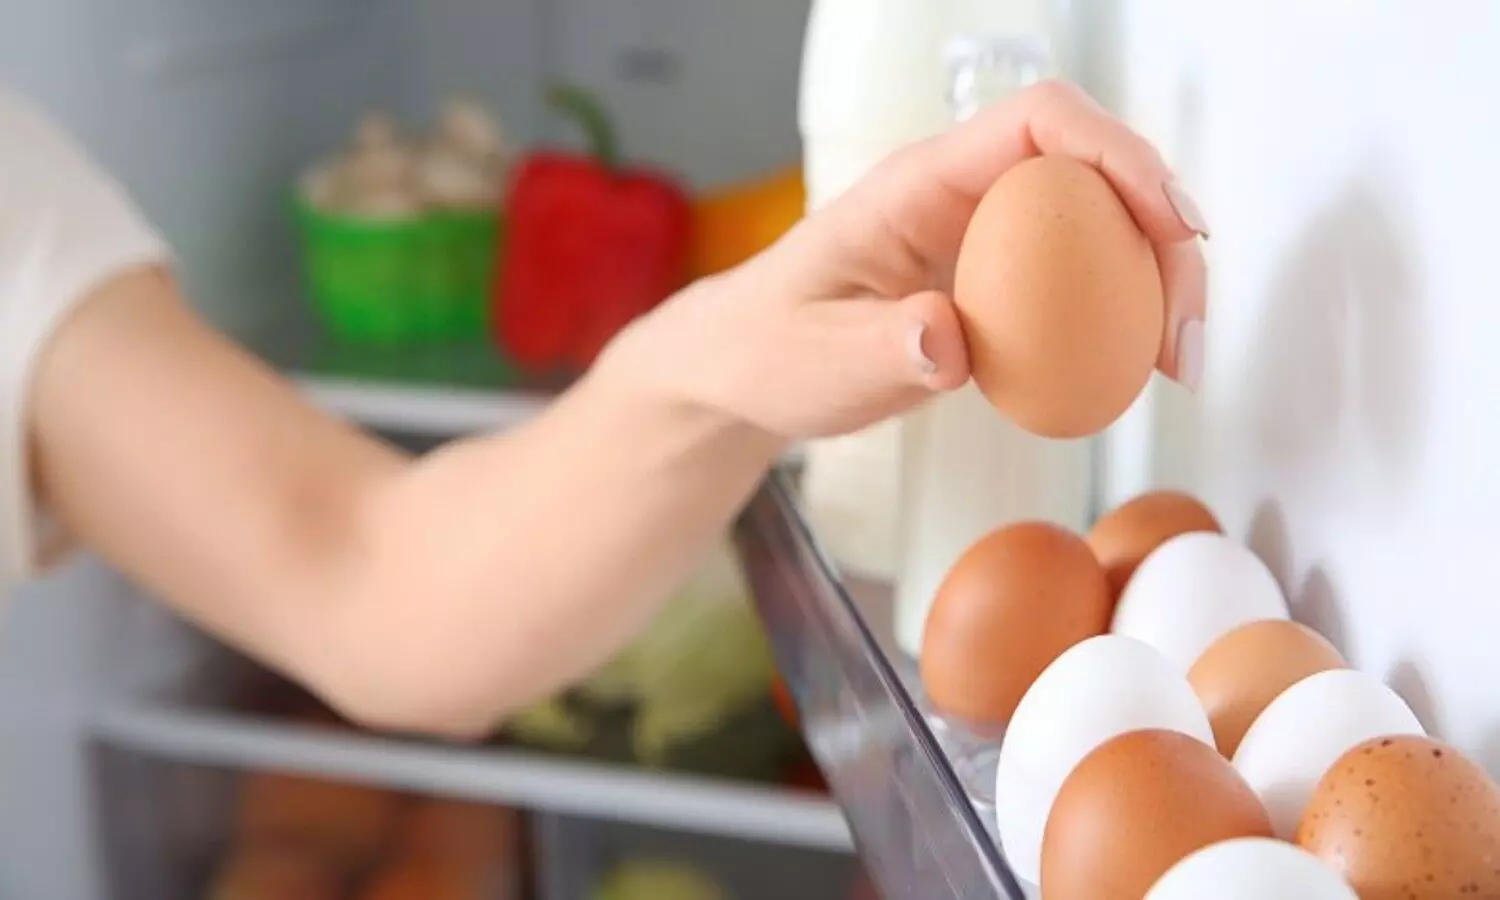 Eggs in fridge